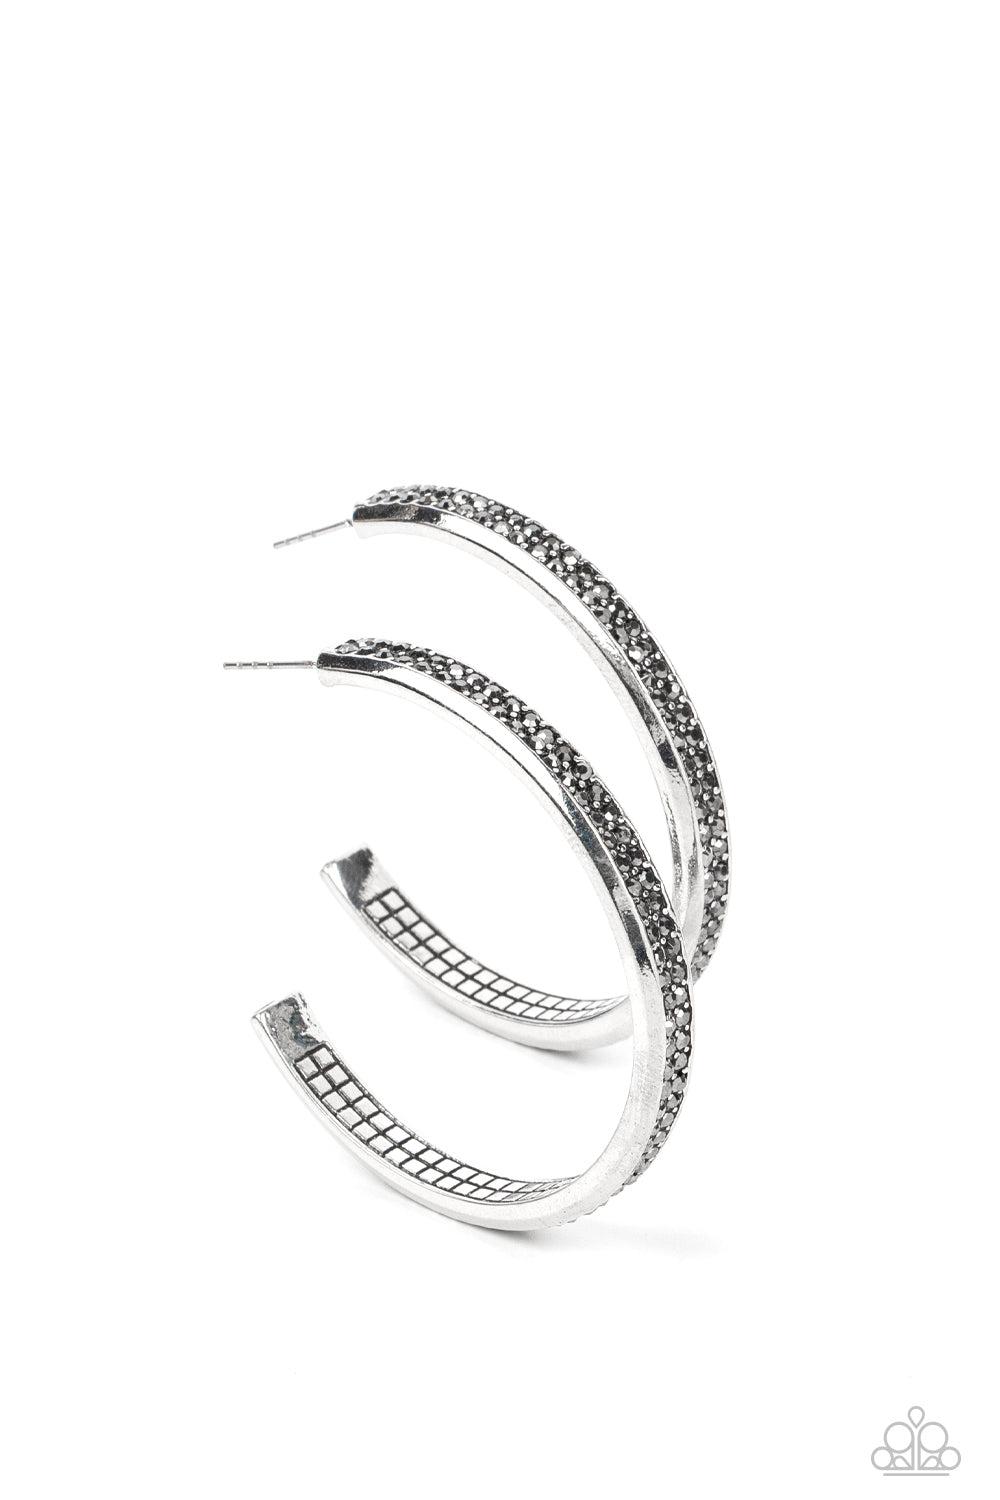 Flash Freeze Silver Hematite Rhinestone Hoop Earrings - Paparazzi Accessories- lightbox - CarasShop.com - $5 Jewelry by Cara Jewels